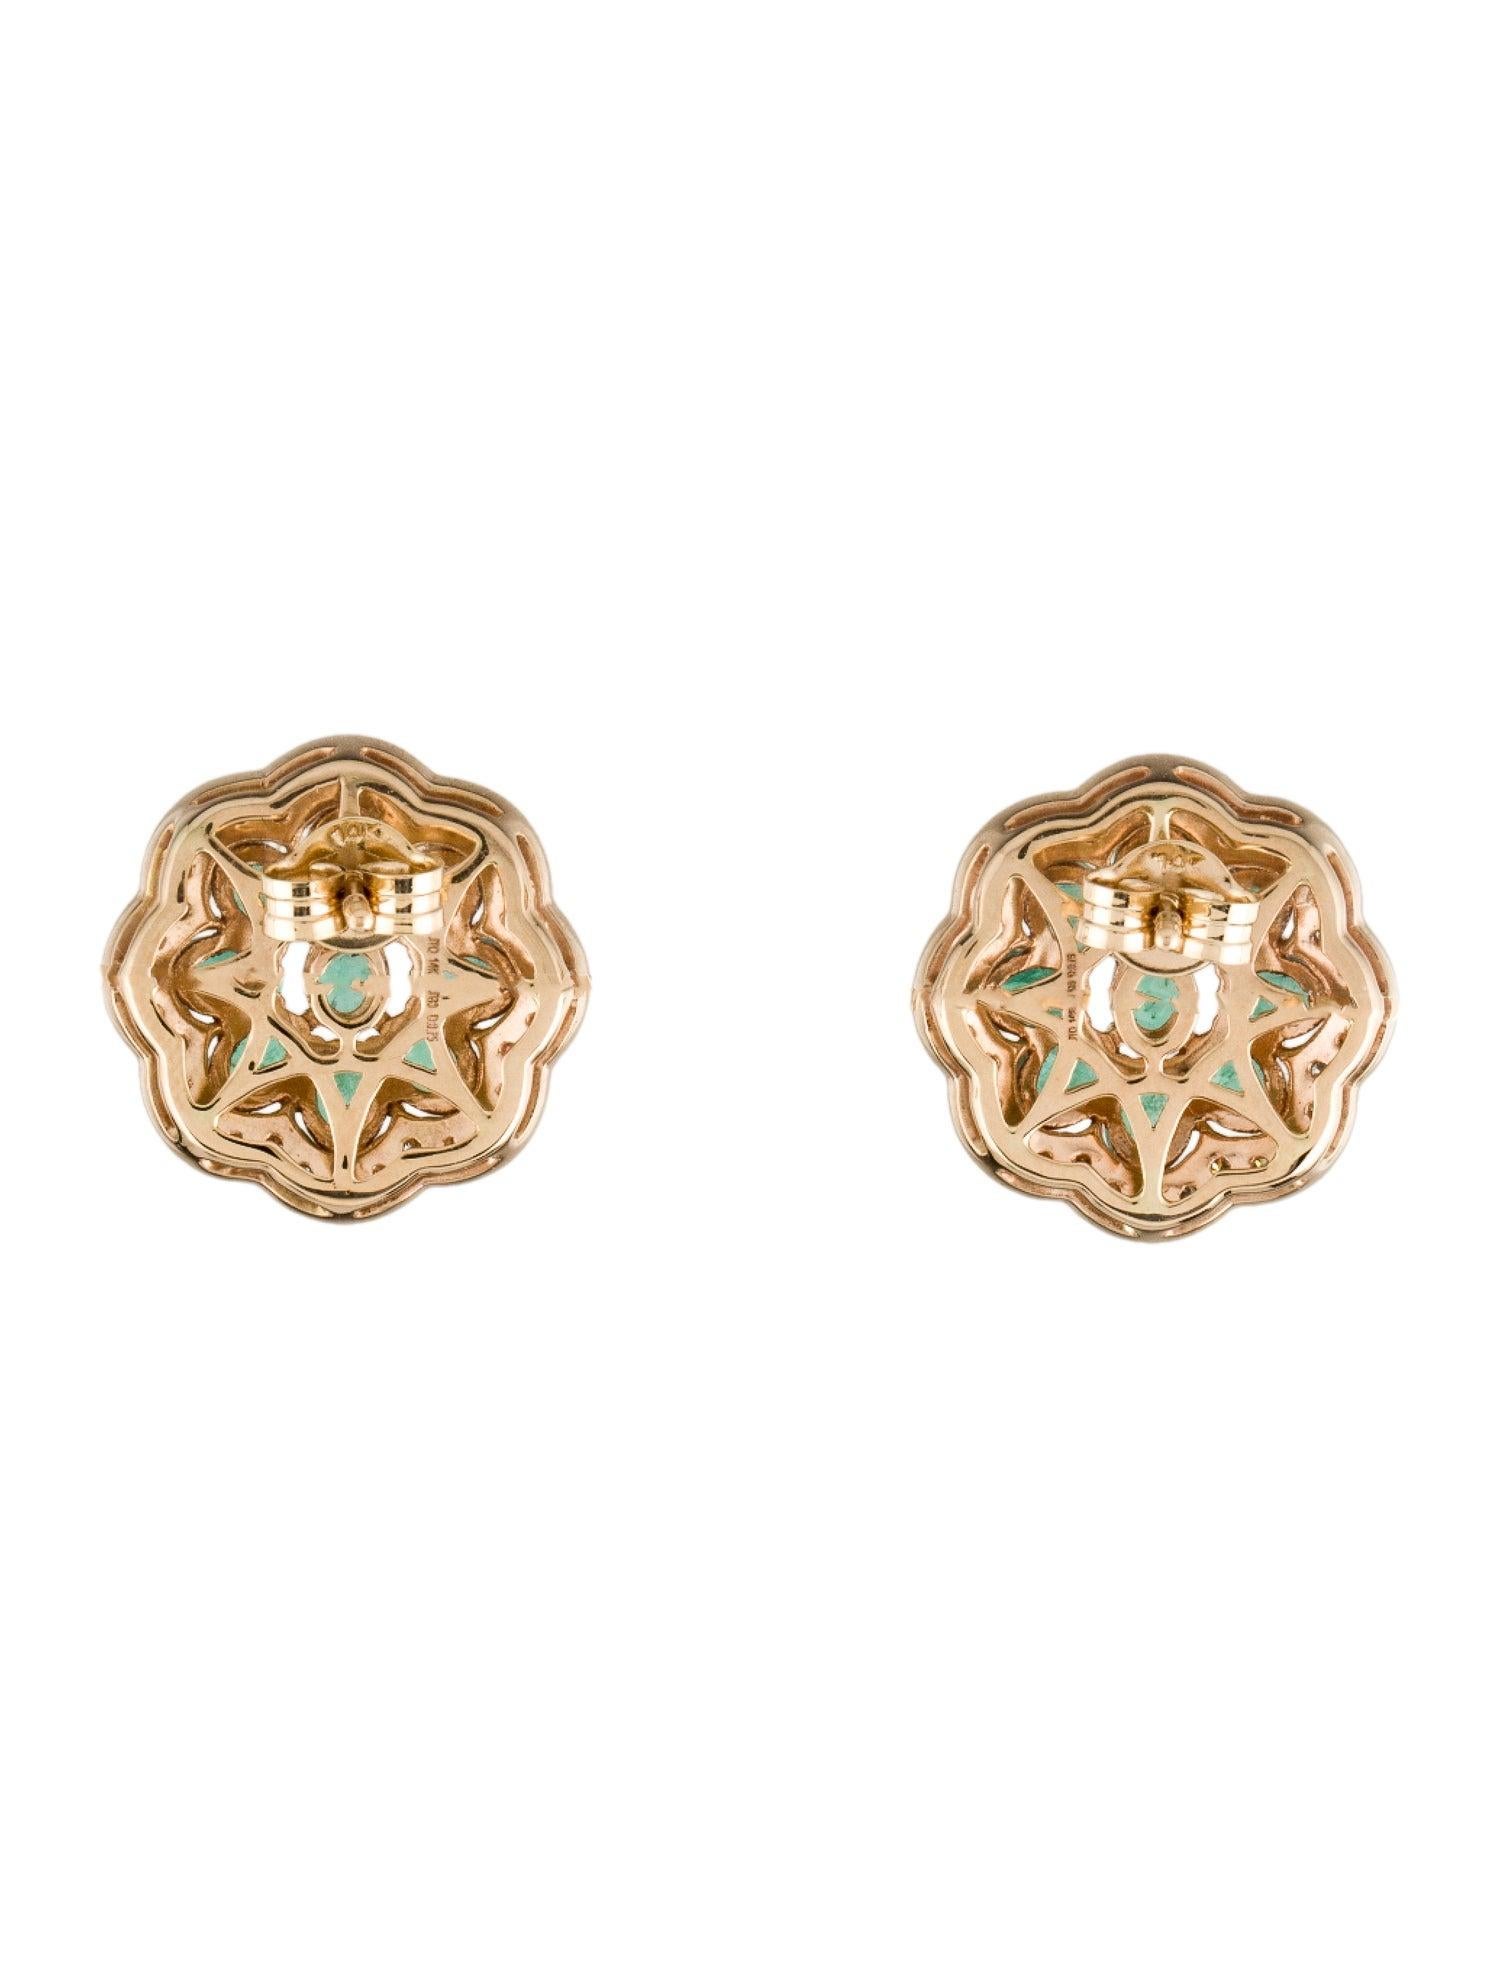 Women's 14K Emerald & Diamond Stud Earrings- Exquisite Gemstone Jewelry Timeless Glamour